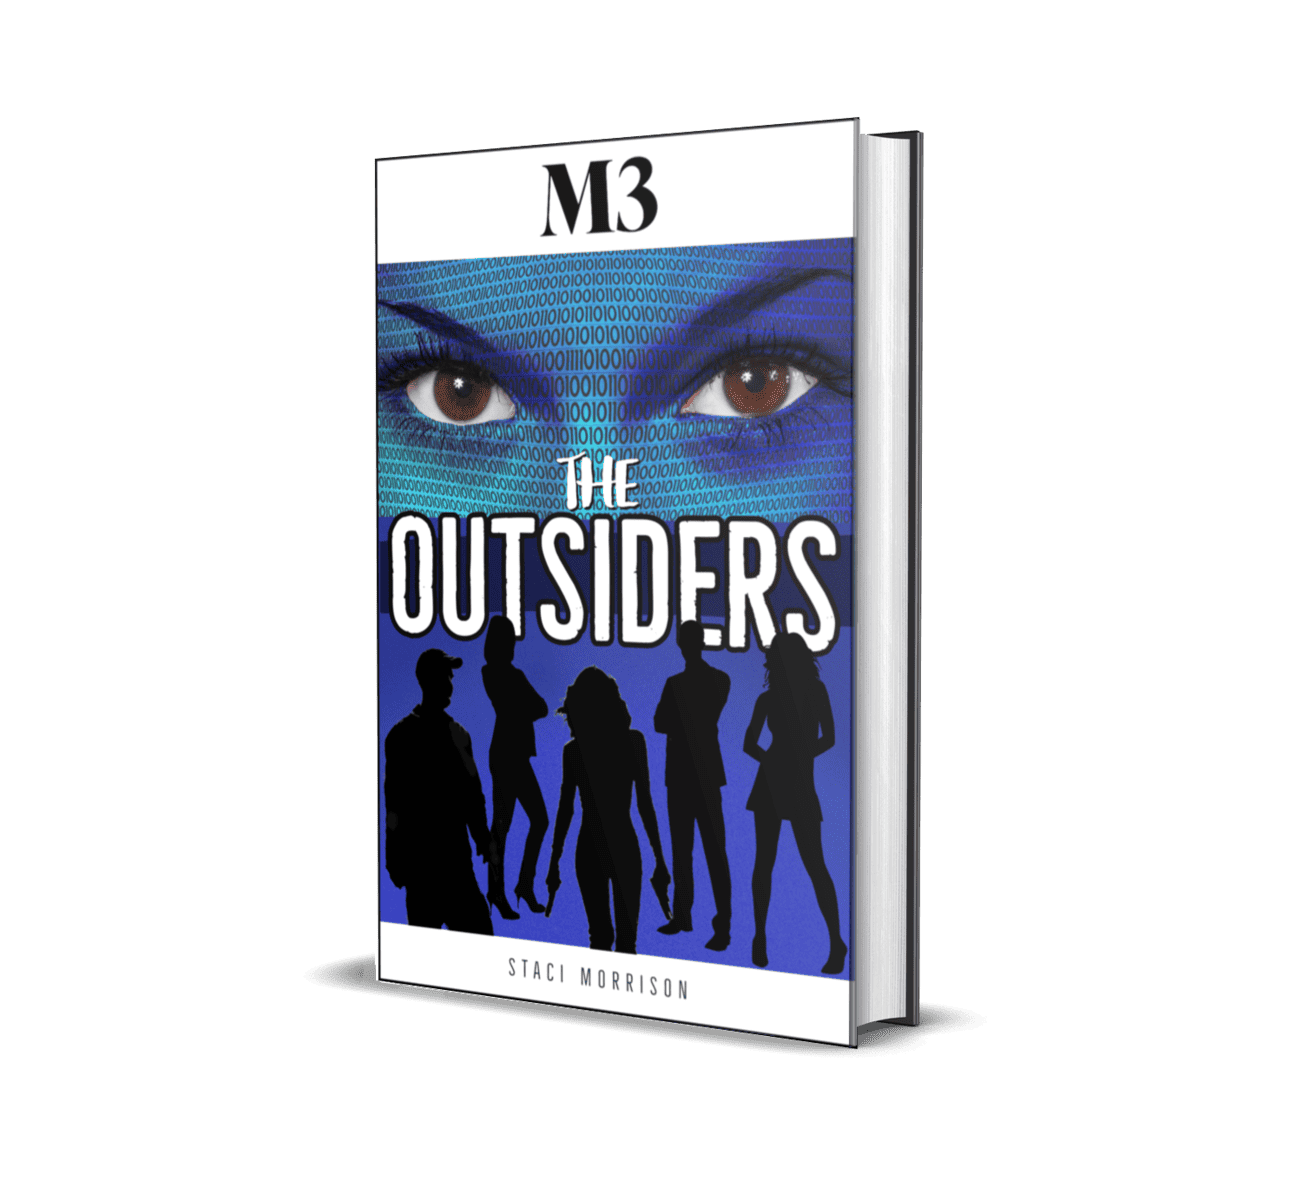 M3 the outsiders, millennium series, staci morrison.